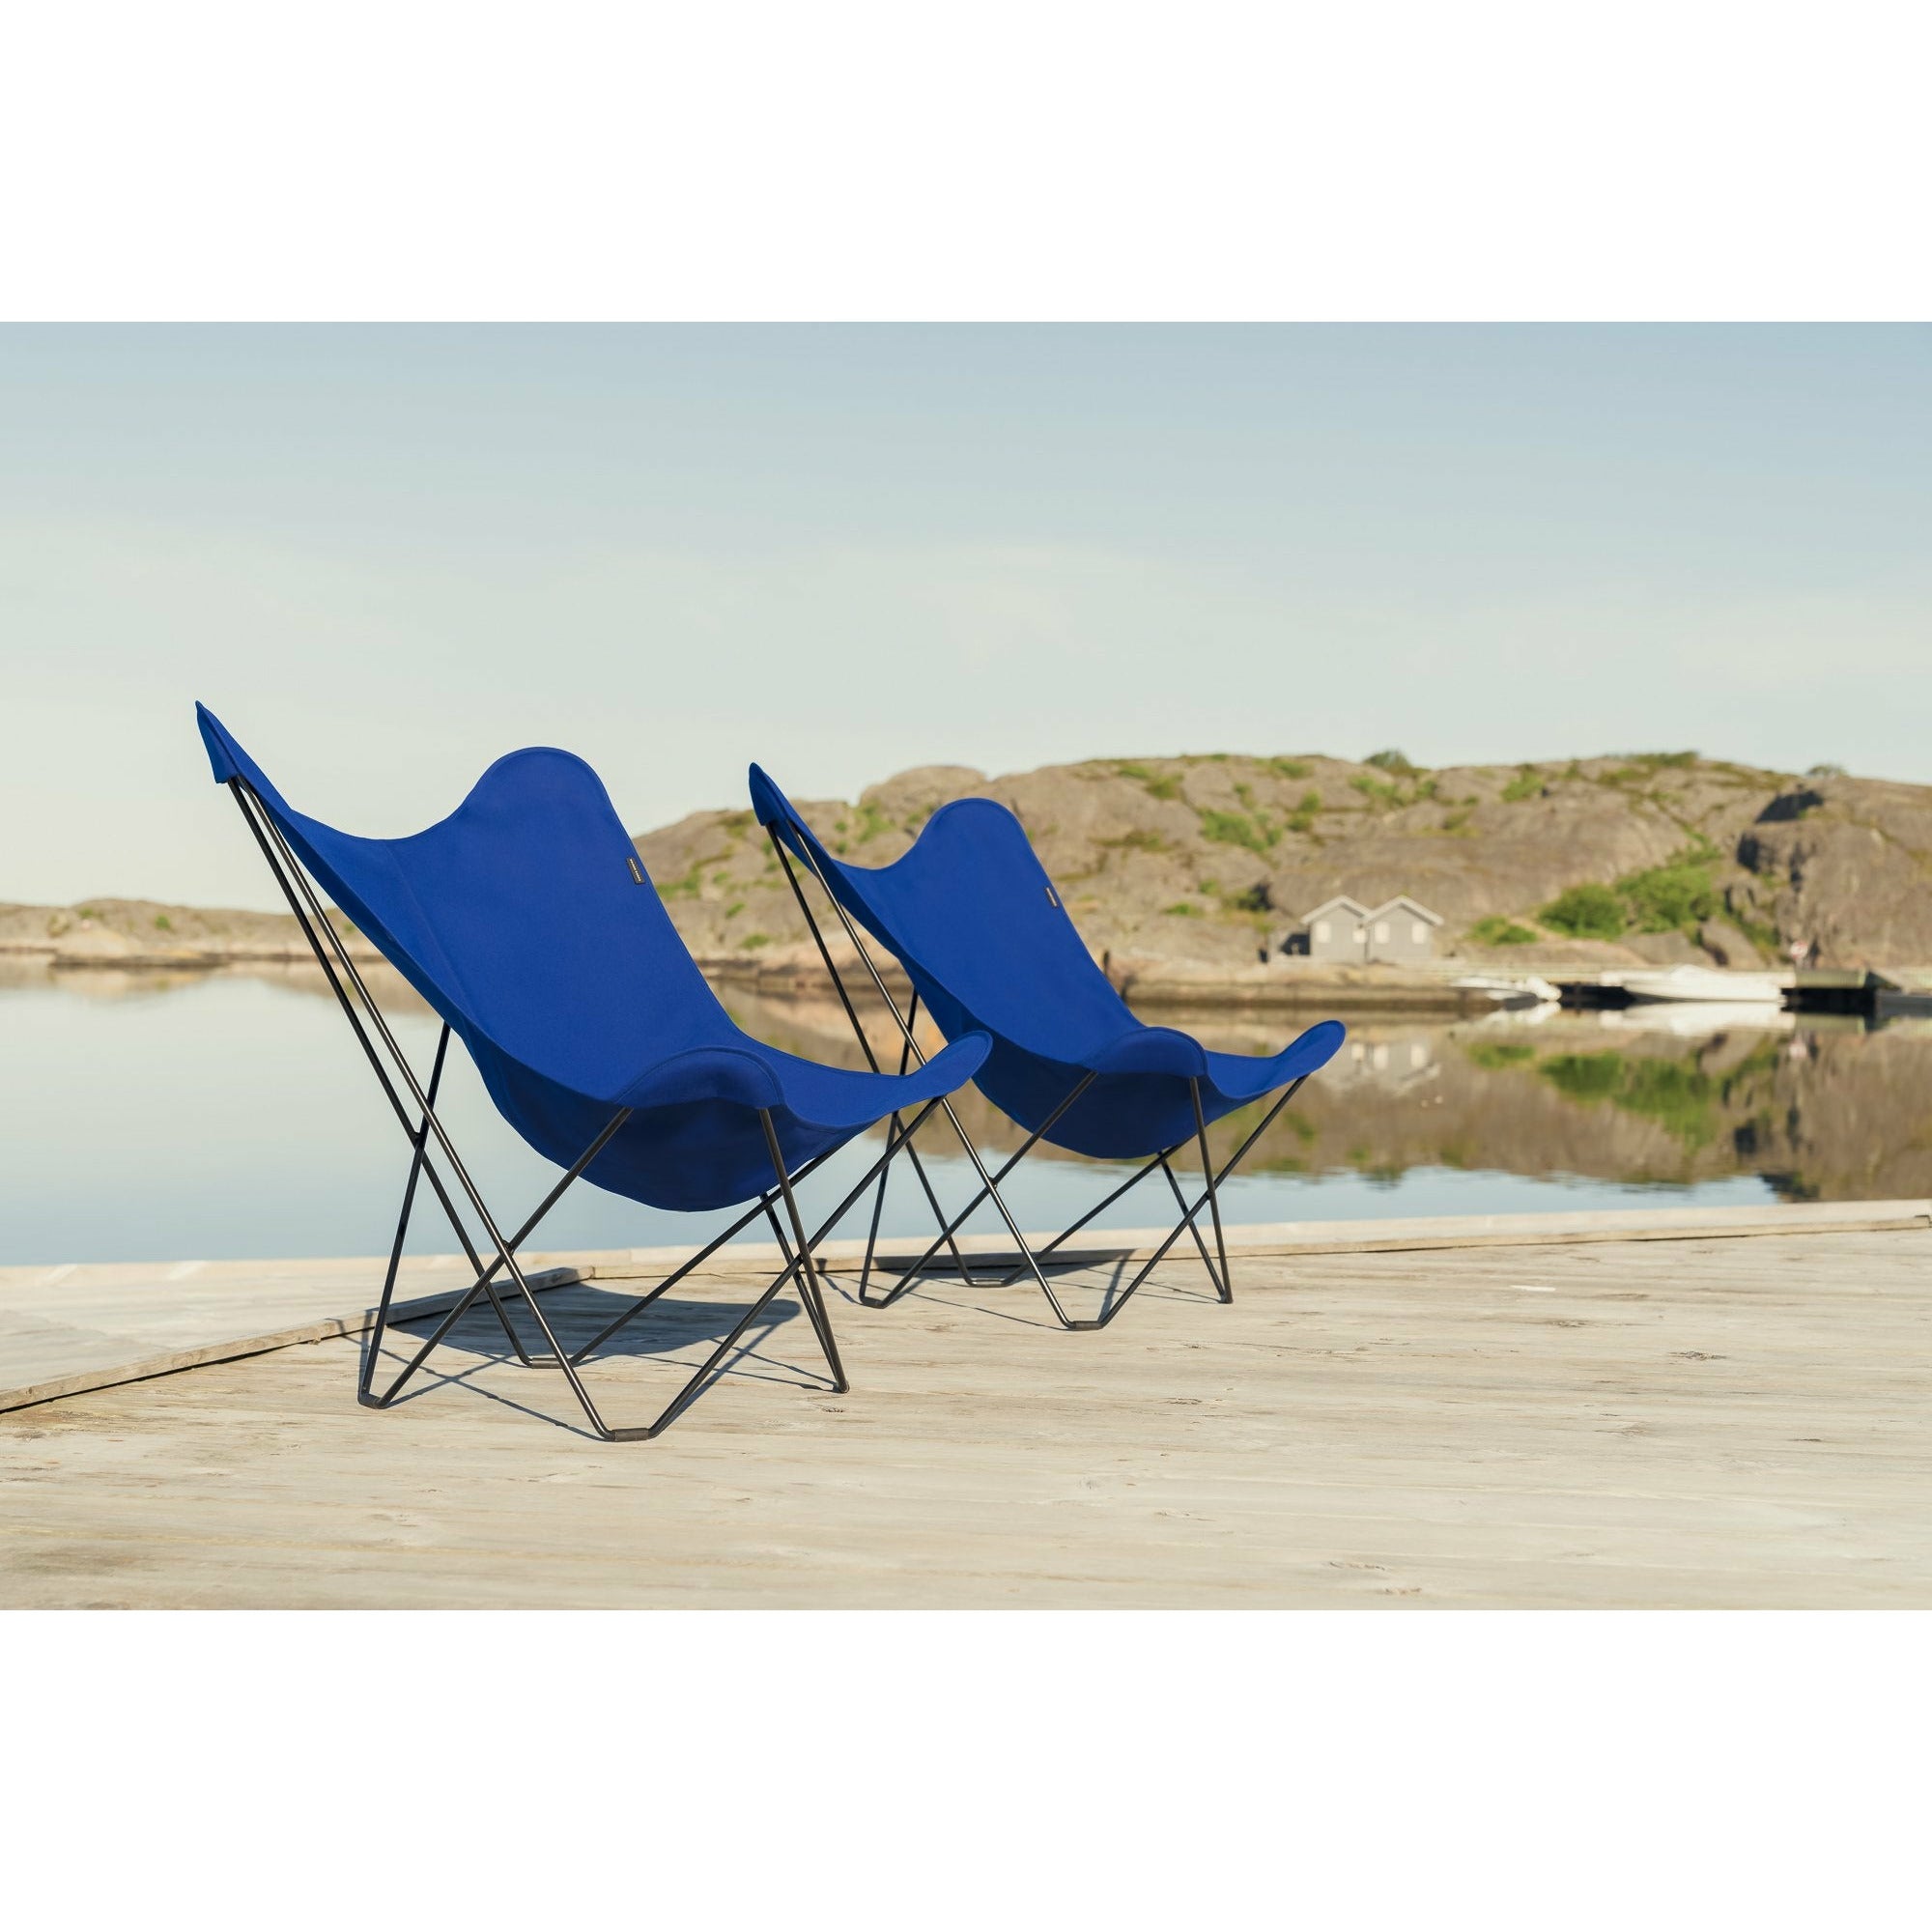 Cuero Sunshine Mariposa Butterfly Chair, Galvanisé Bleu Atlantique/Noir